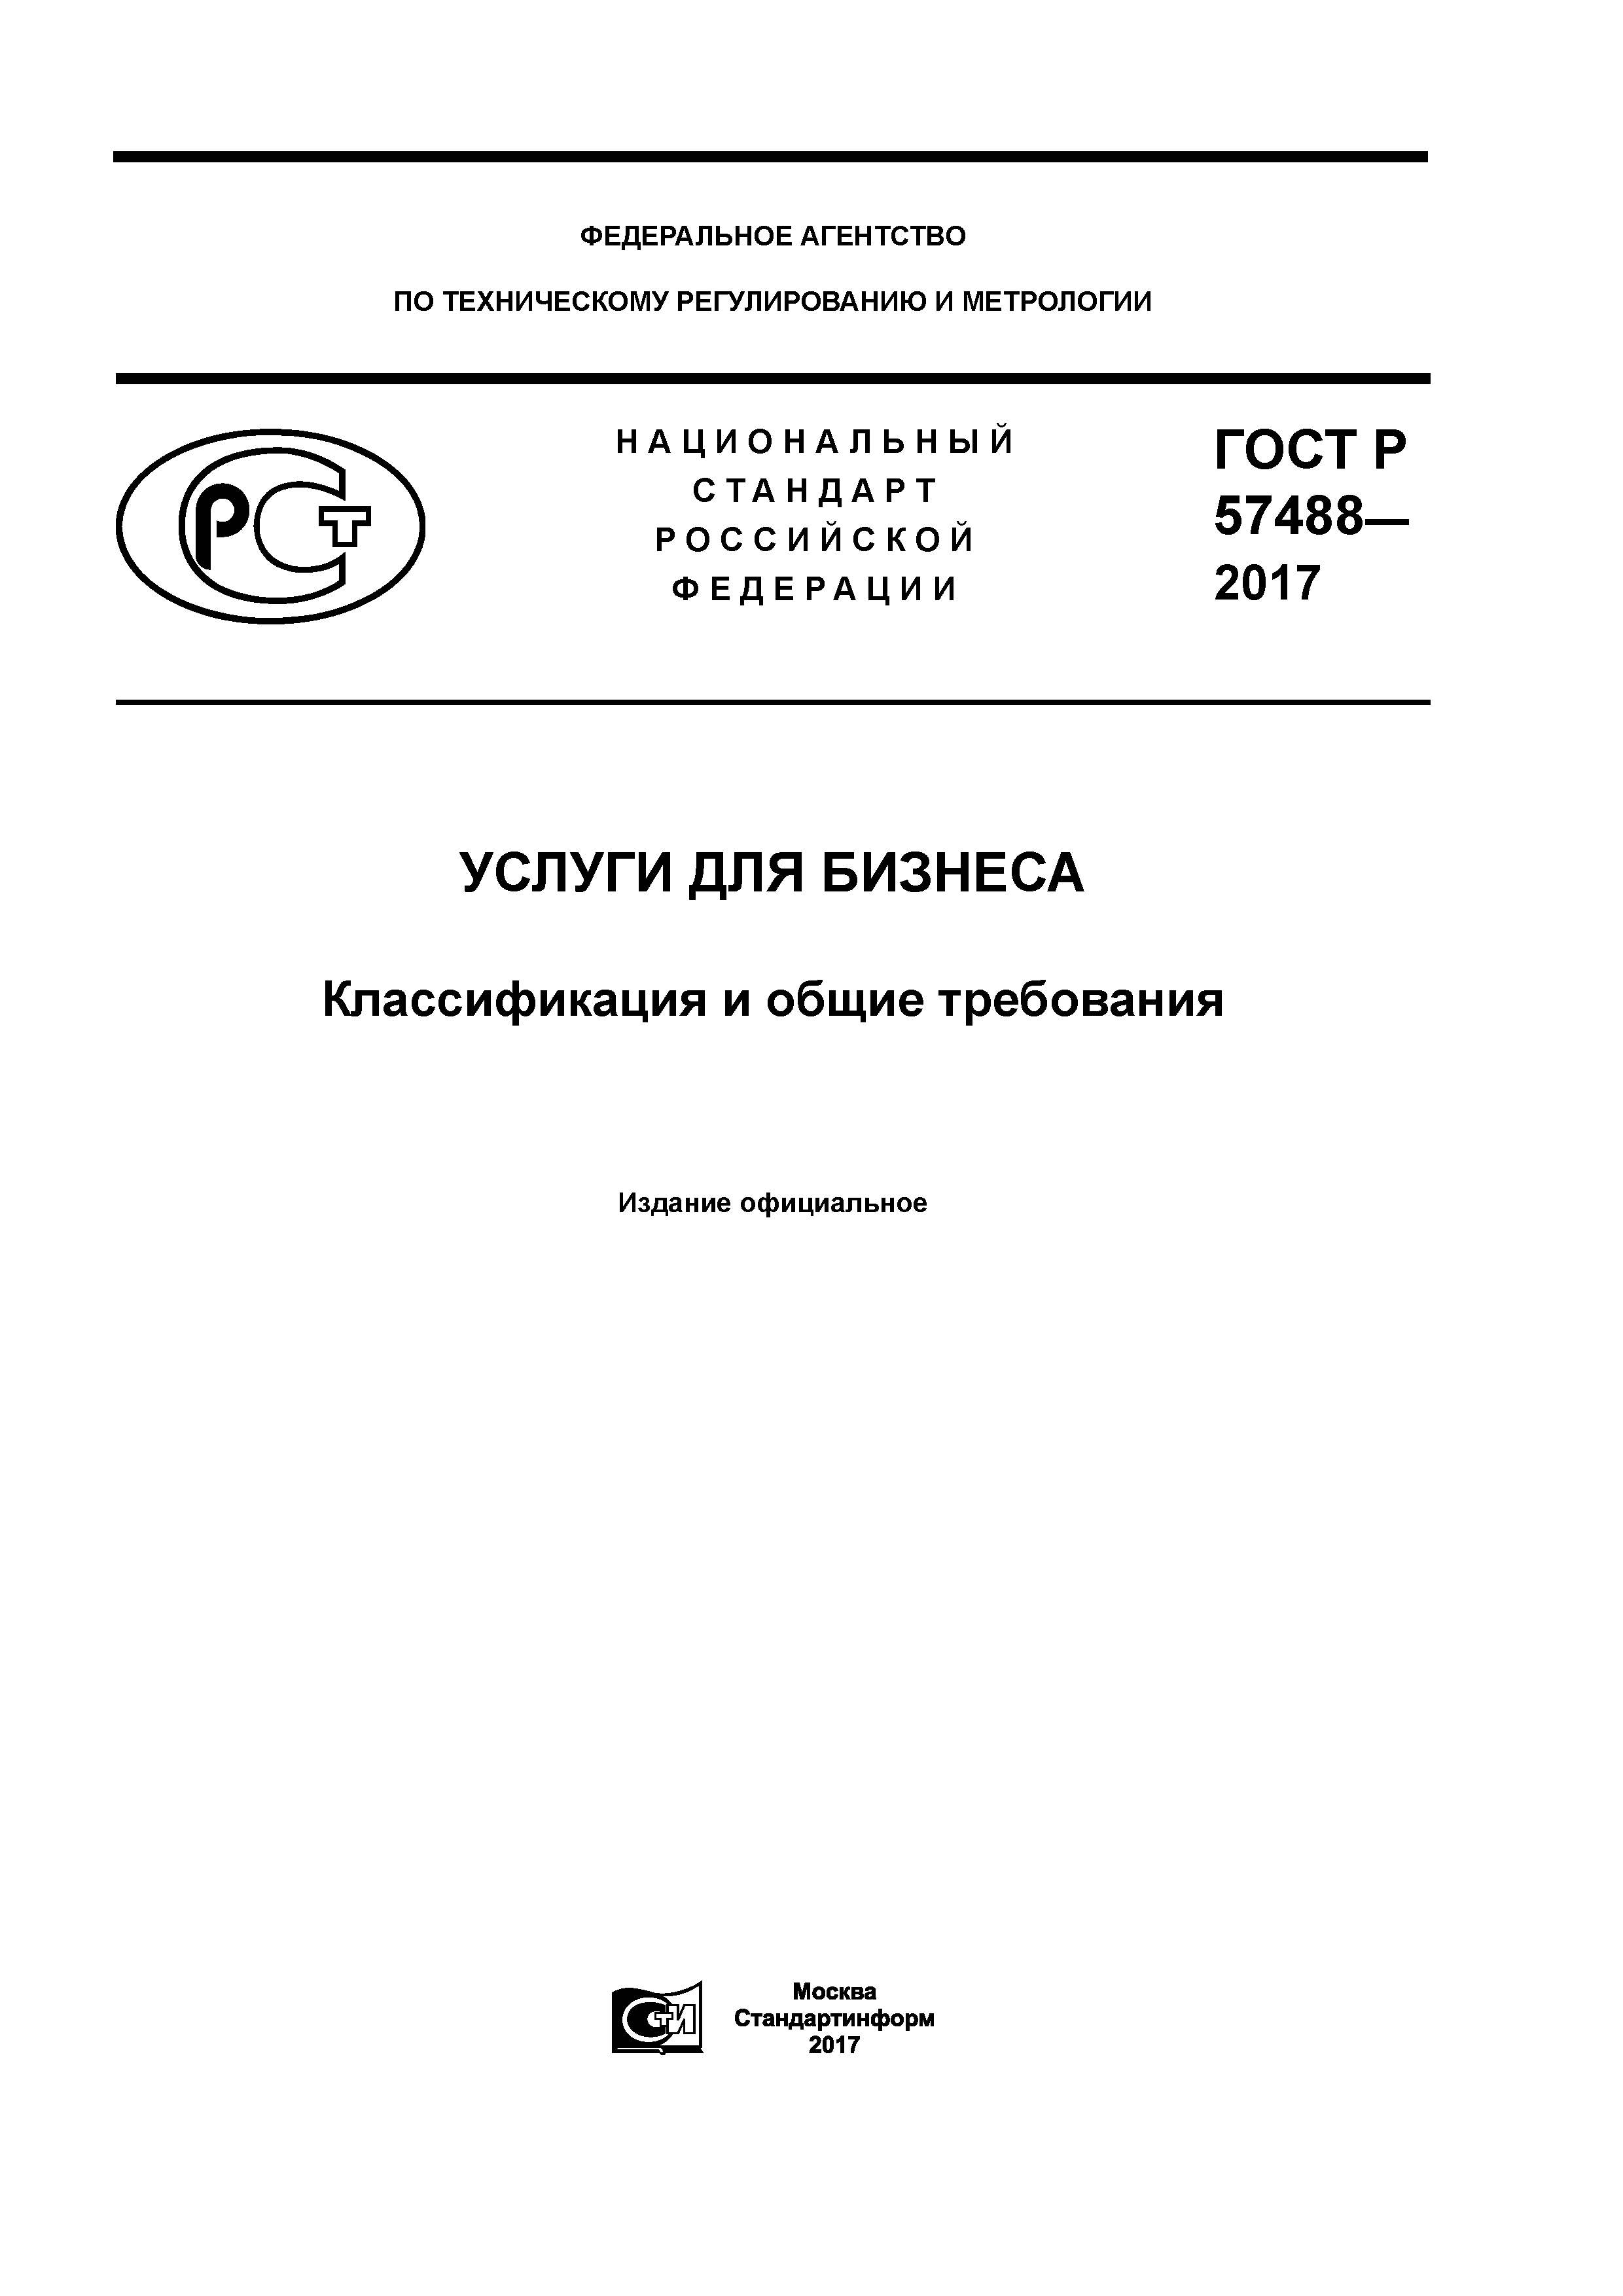 ГОСТ Р 57488-2017